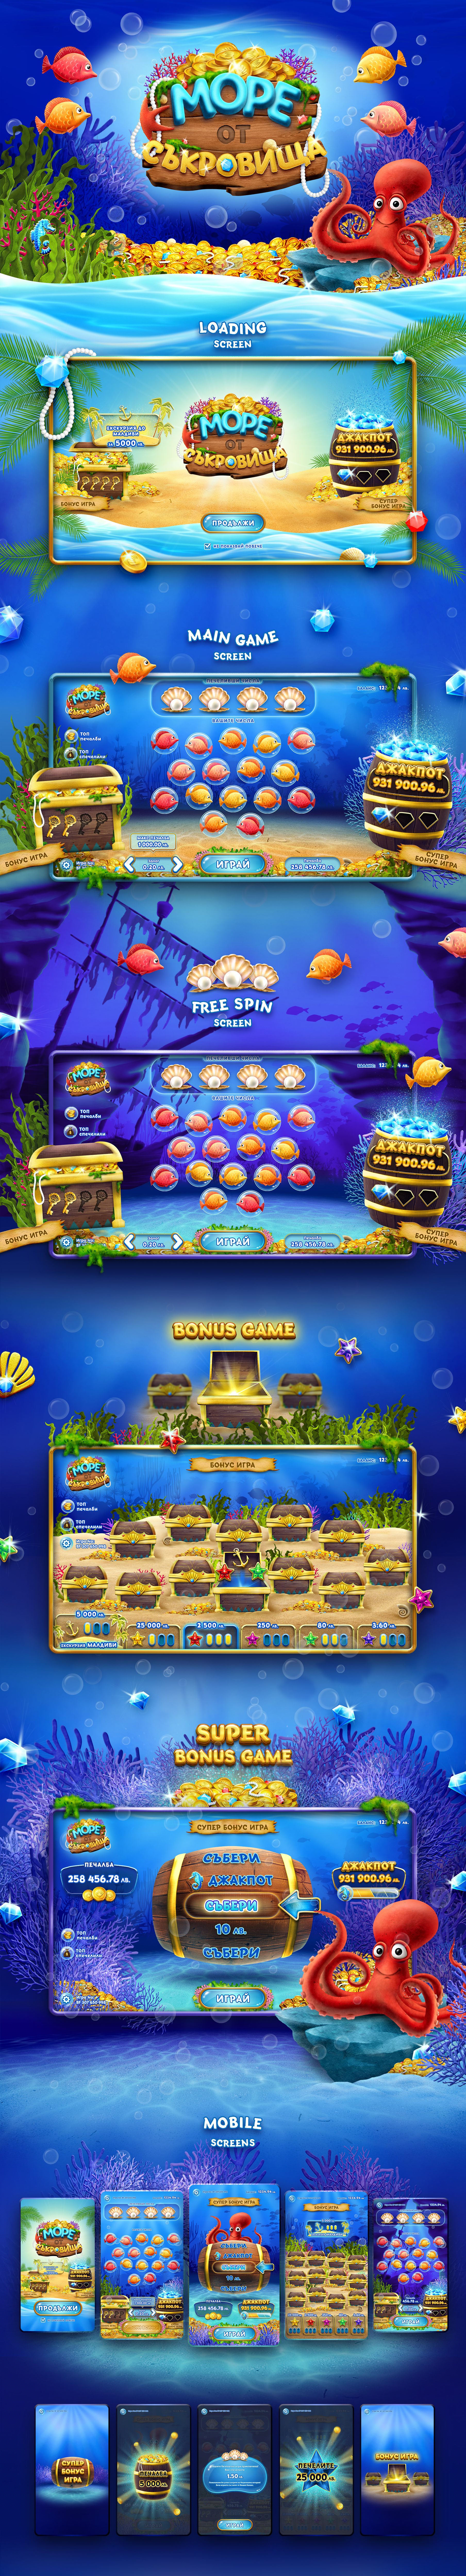 Sea Treasures casino game design and illustration 